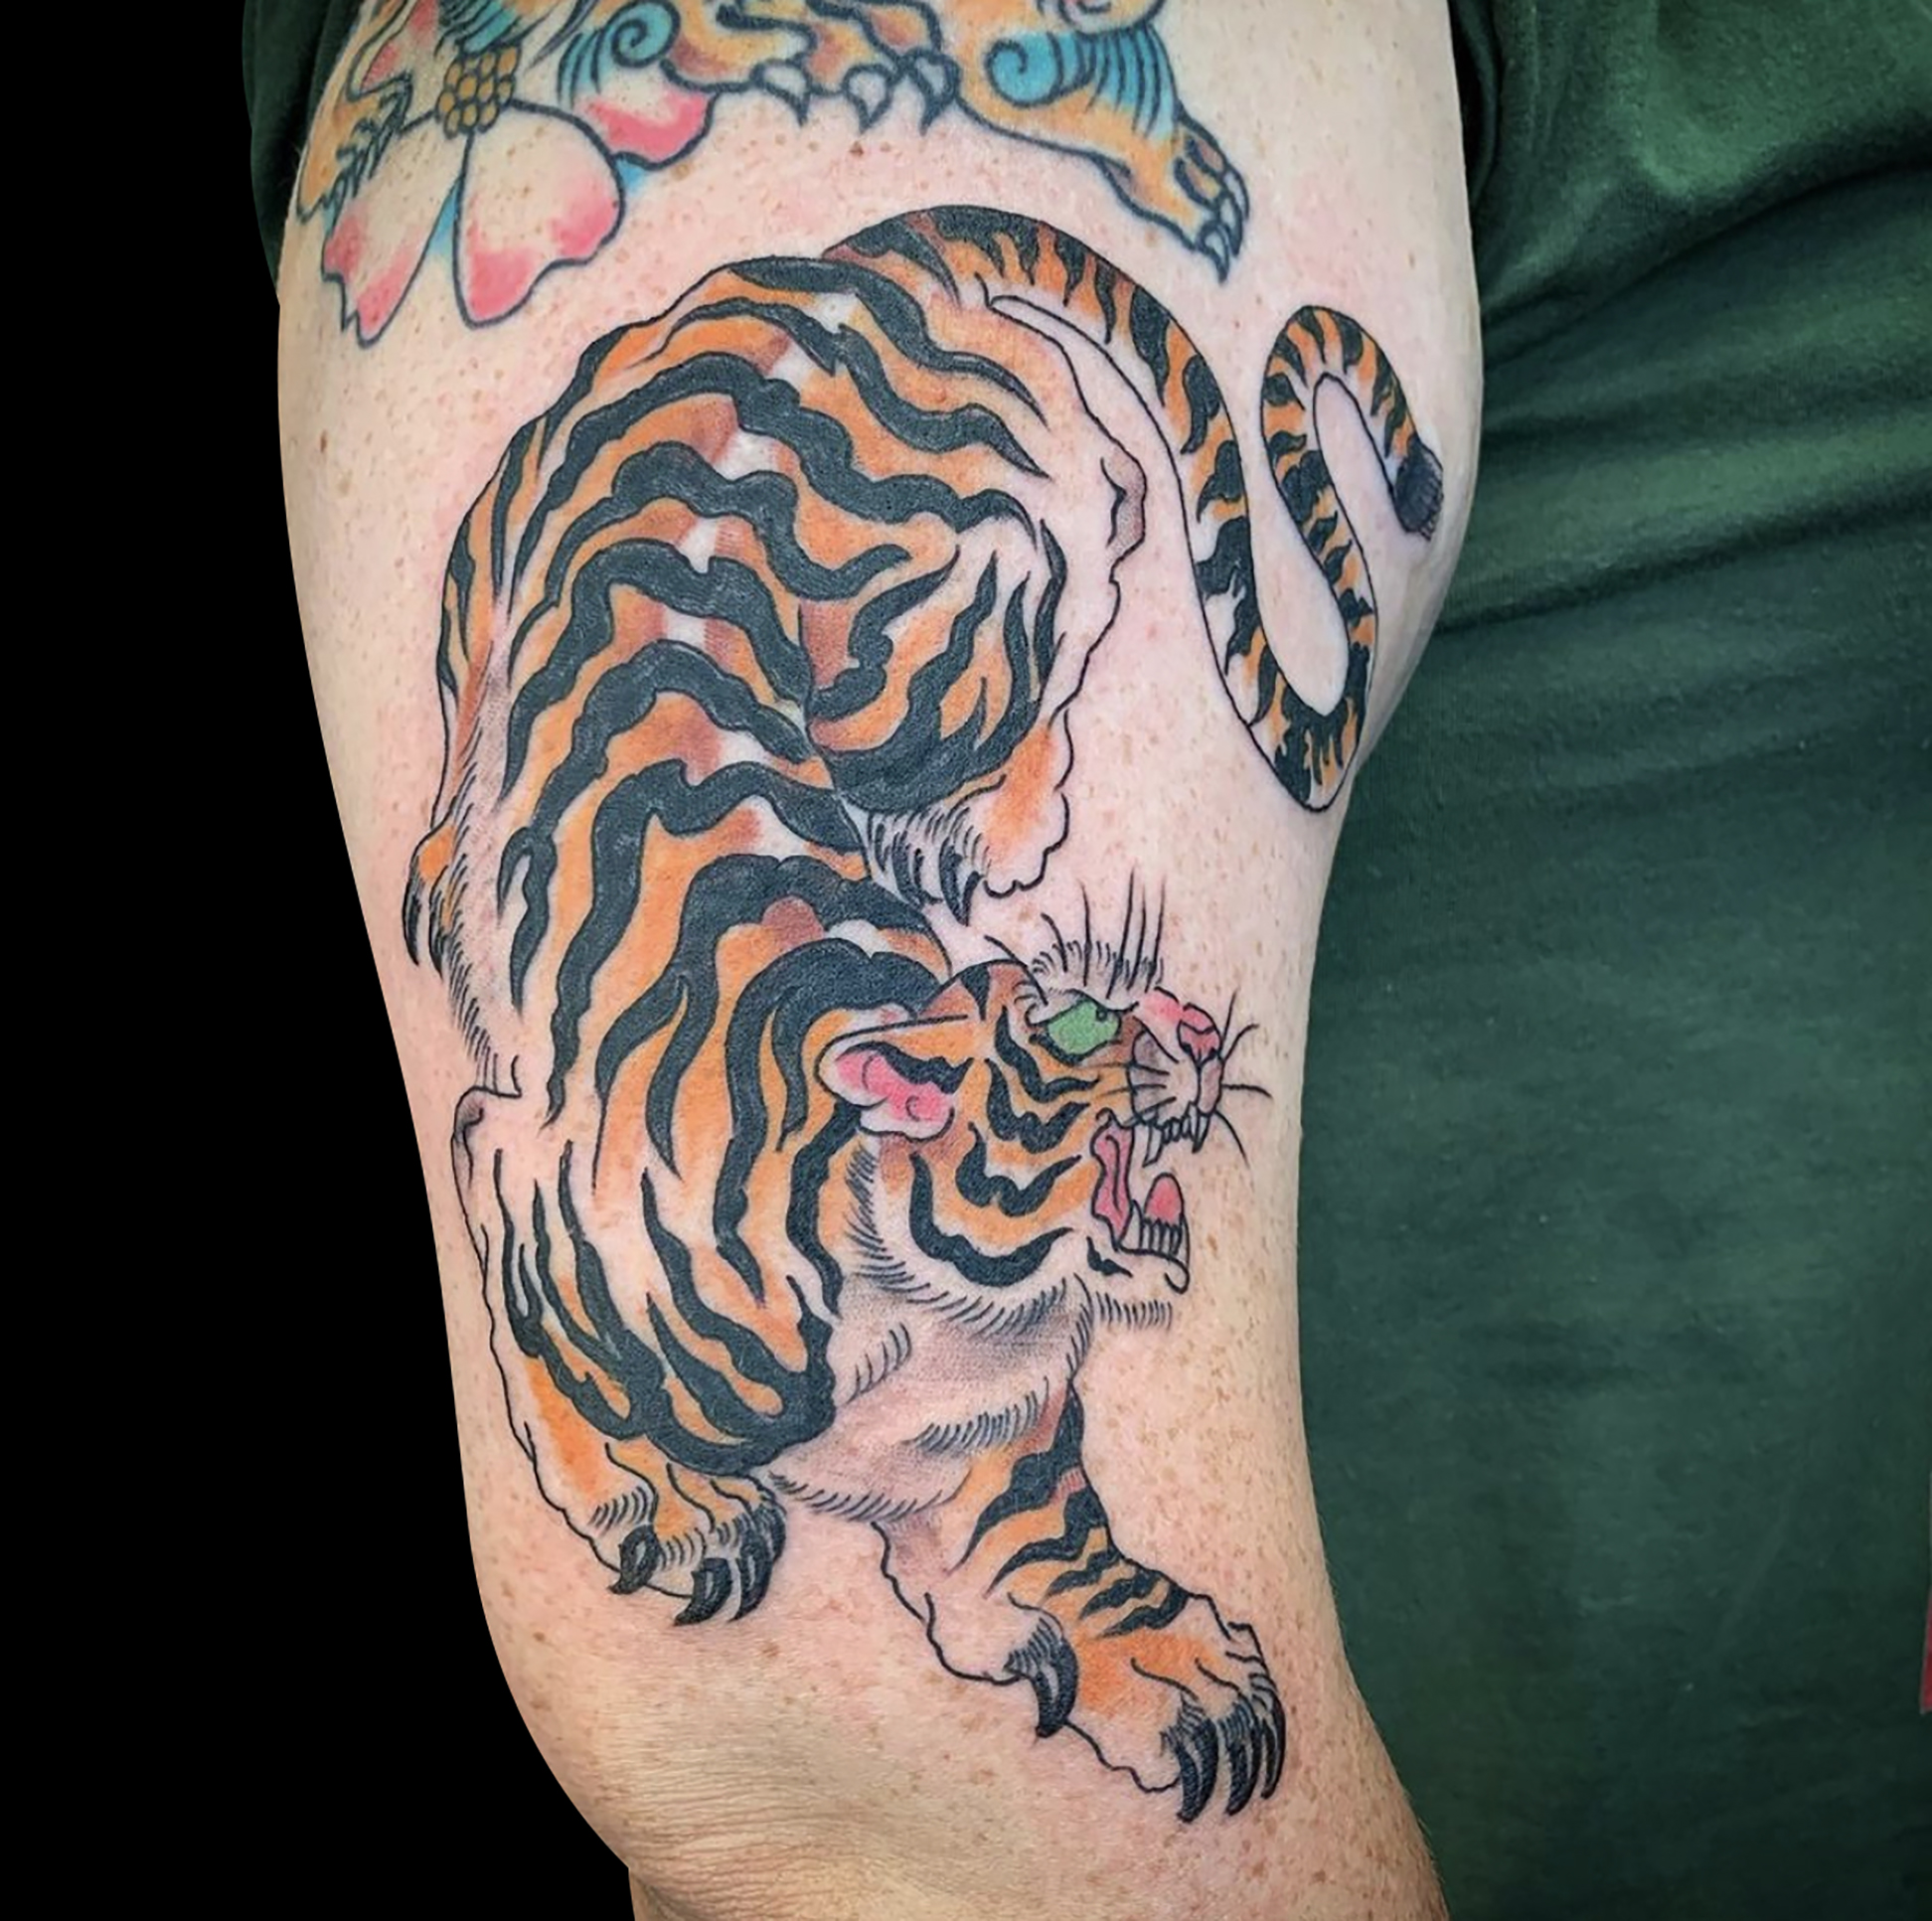 Iron Tiger Tuesday | Iron Tiger Tattoo